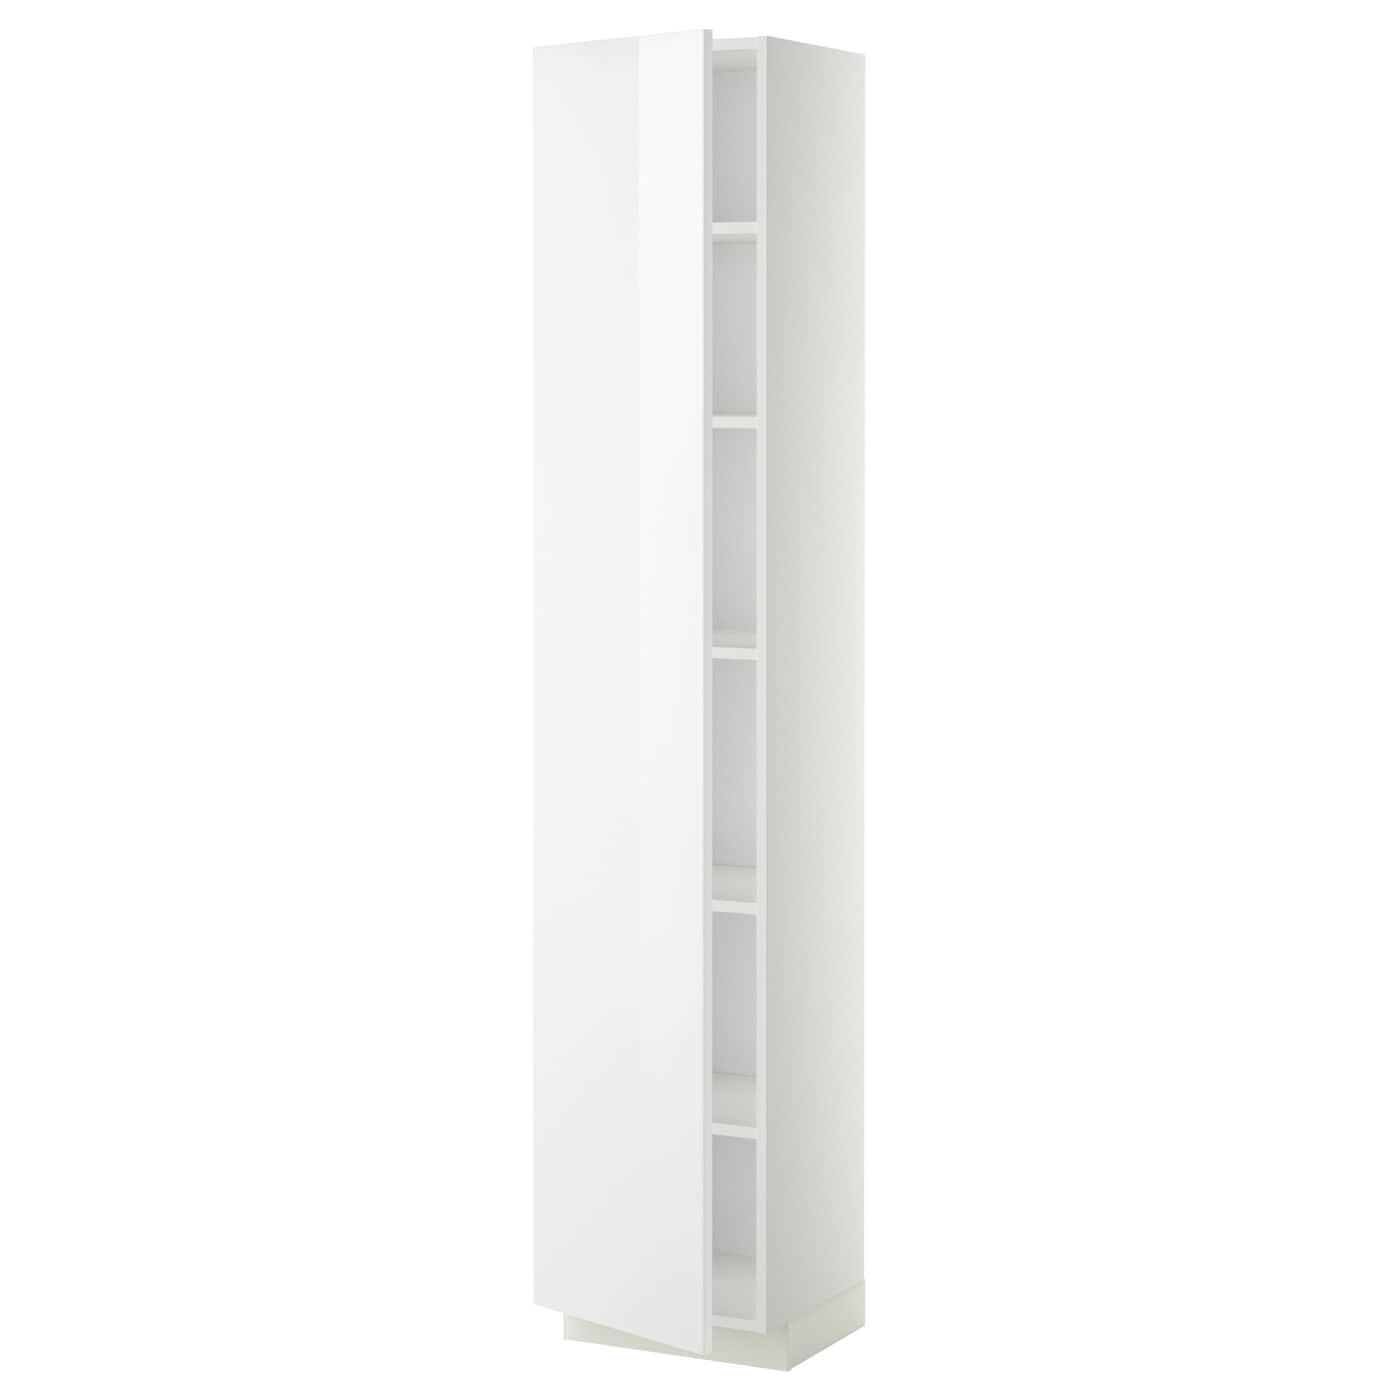 Высокий кухонный шкаф с полками - IKEA METOD/МЕТОД ИКЕА, 200х37х40 см, белый глянцевый